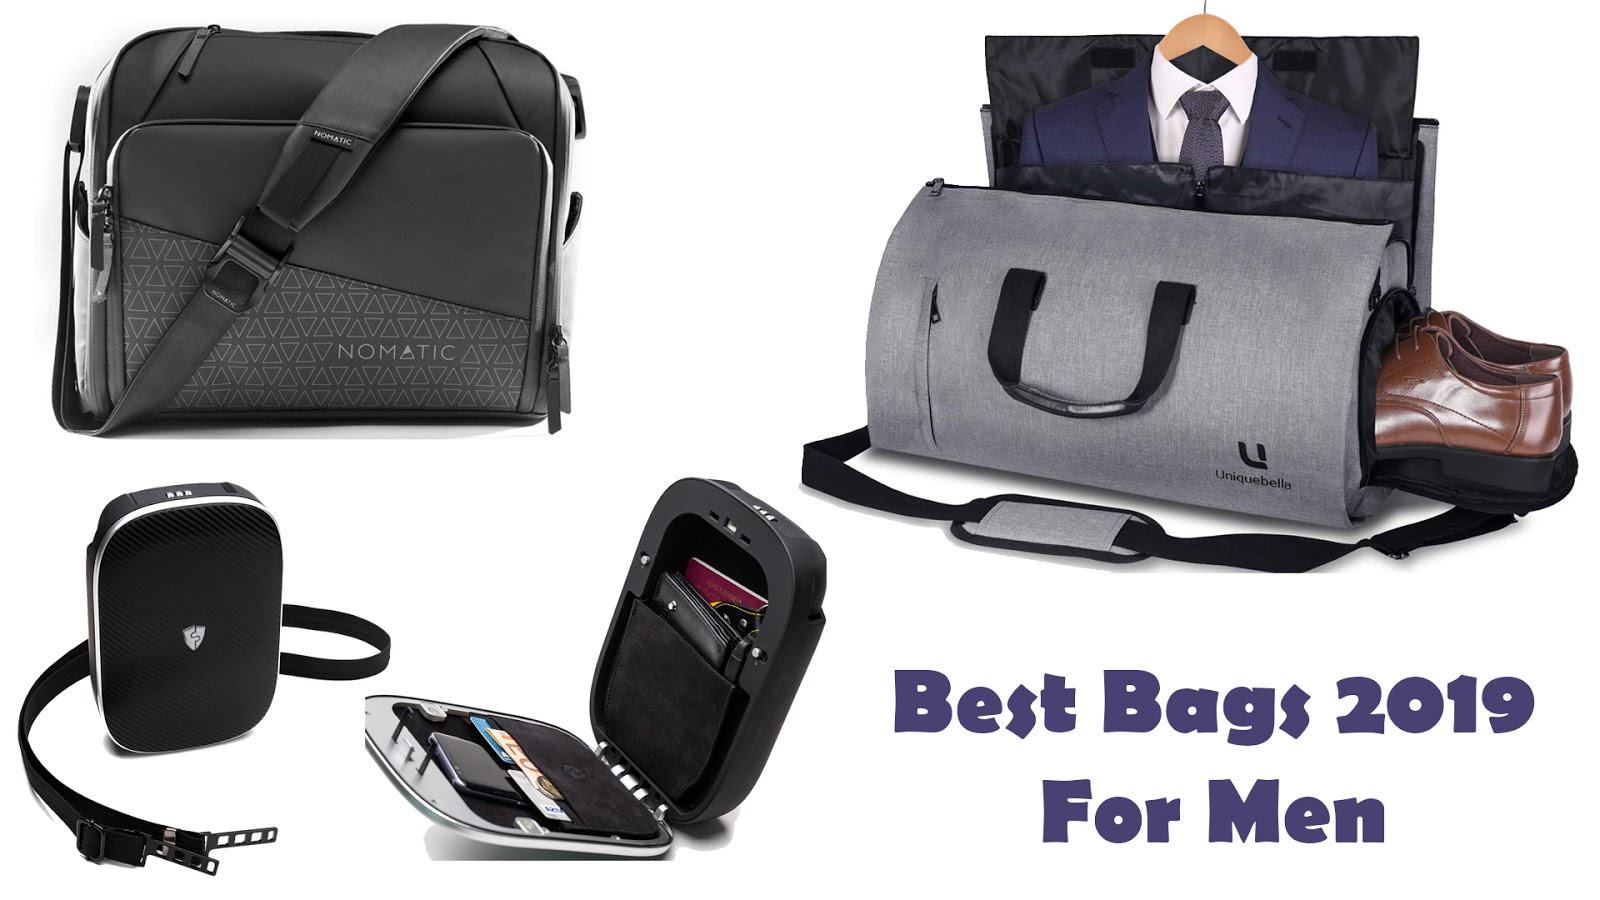 7 Best Bags 2019 For Men - Travel Messenger Bag, Duffle Bag, Camera Bag